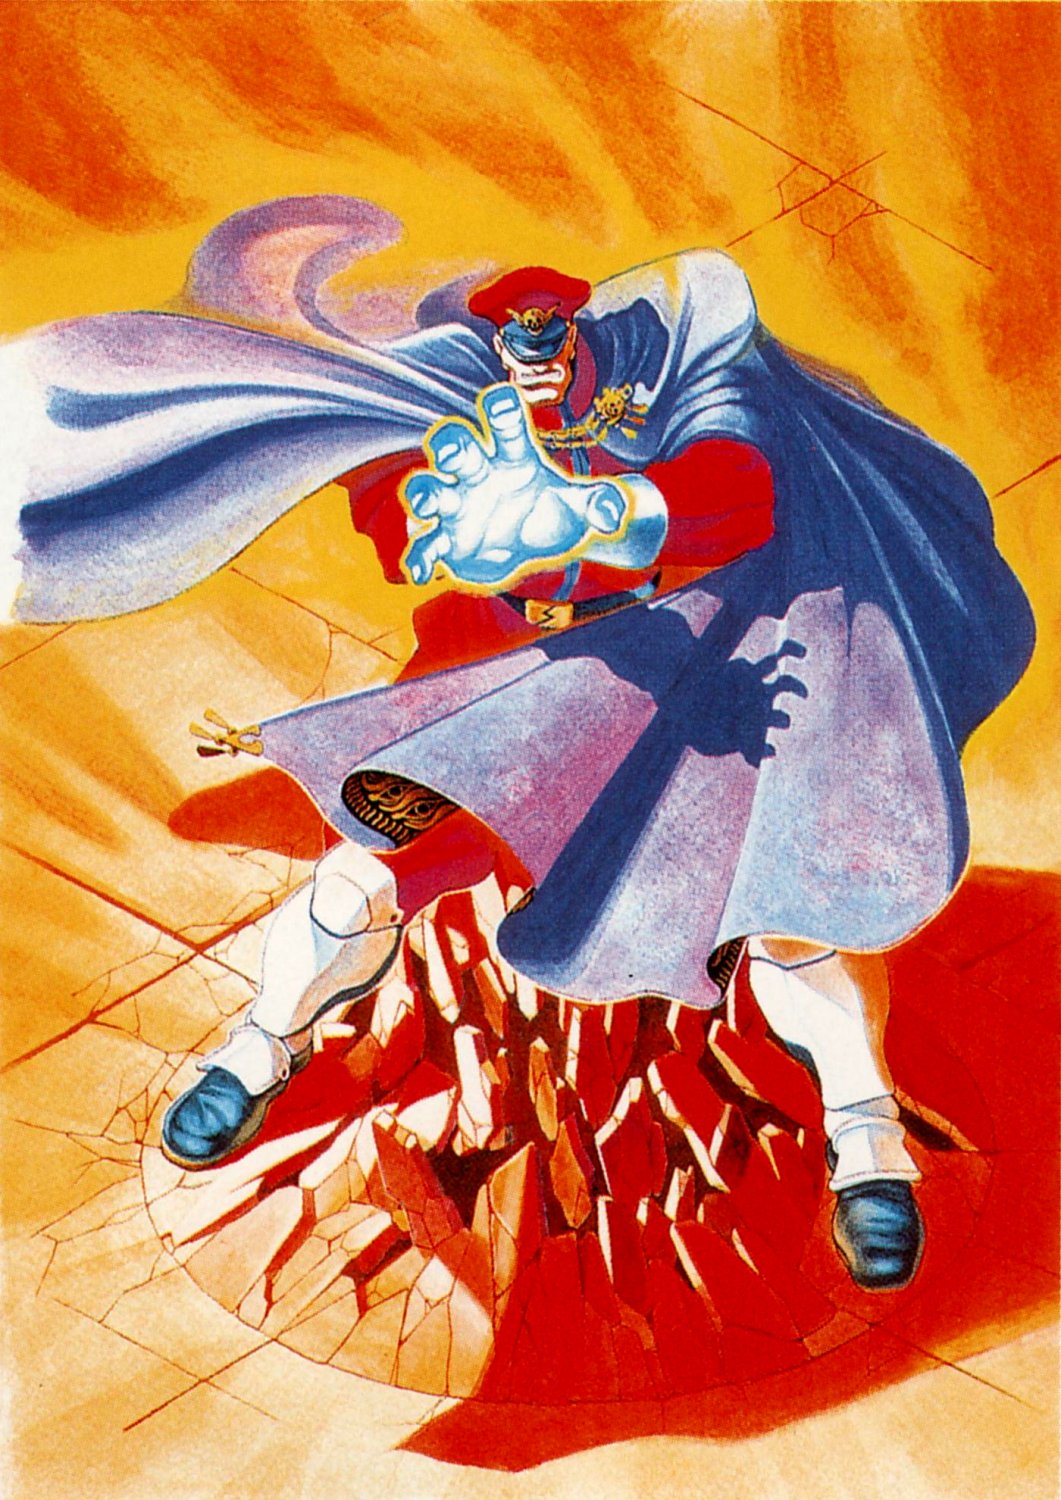 Street Fighter II  M. Bison (Vega in Japan)